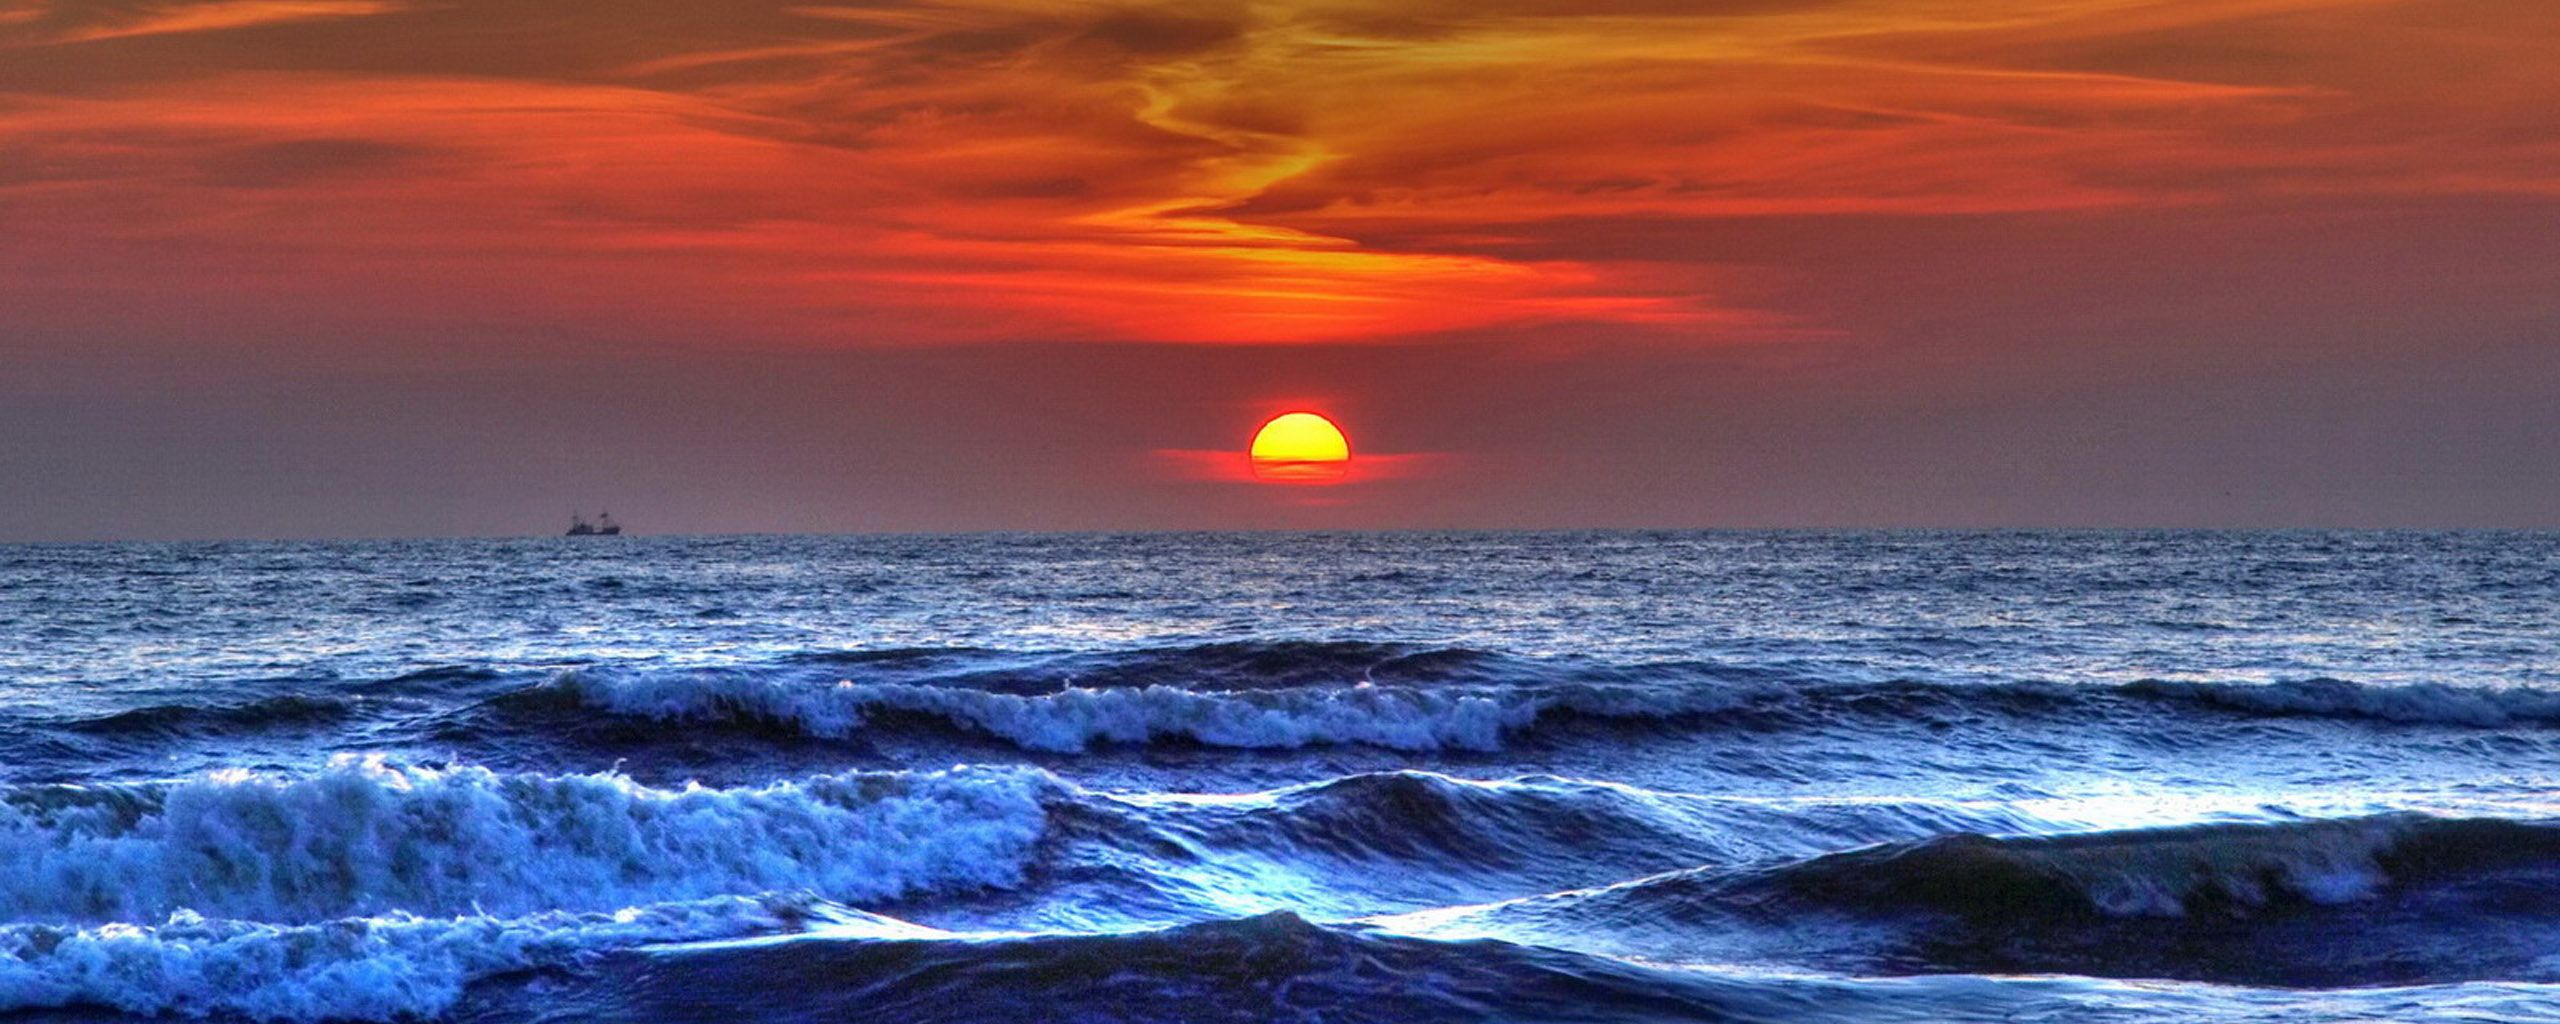 sunset+ocean+pictures | Ocean Sunset by Hanson - Desktop Wallpaper ...